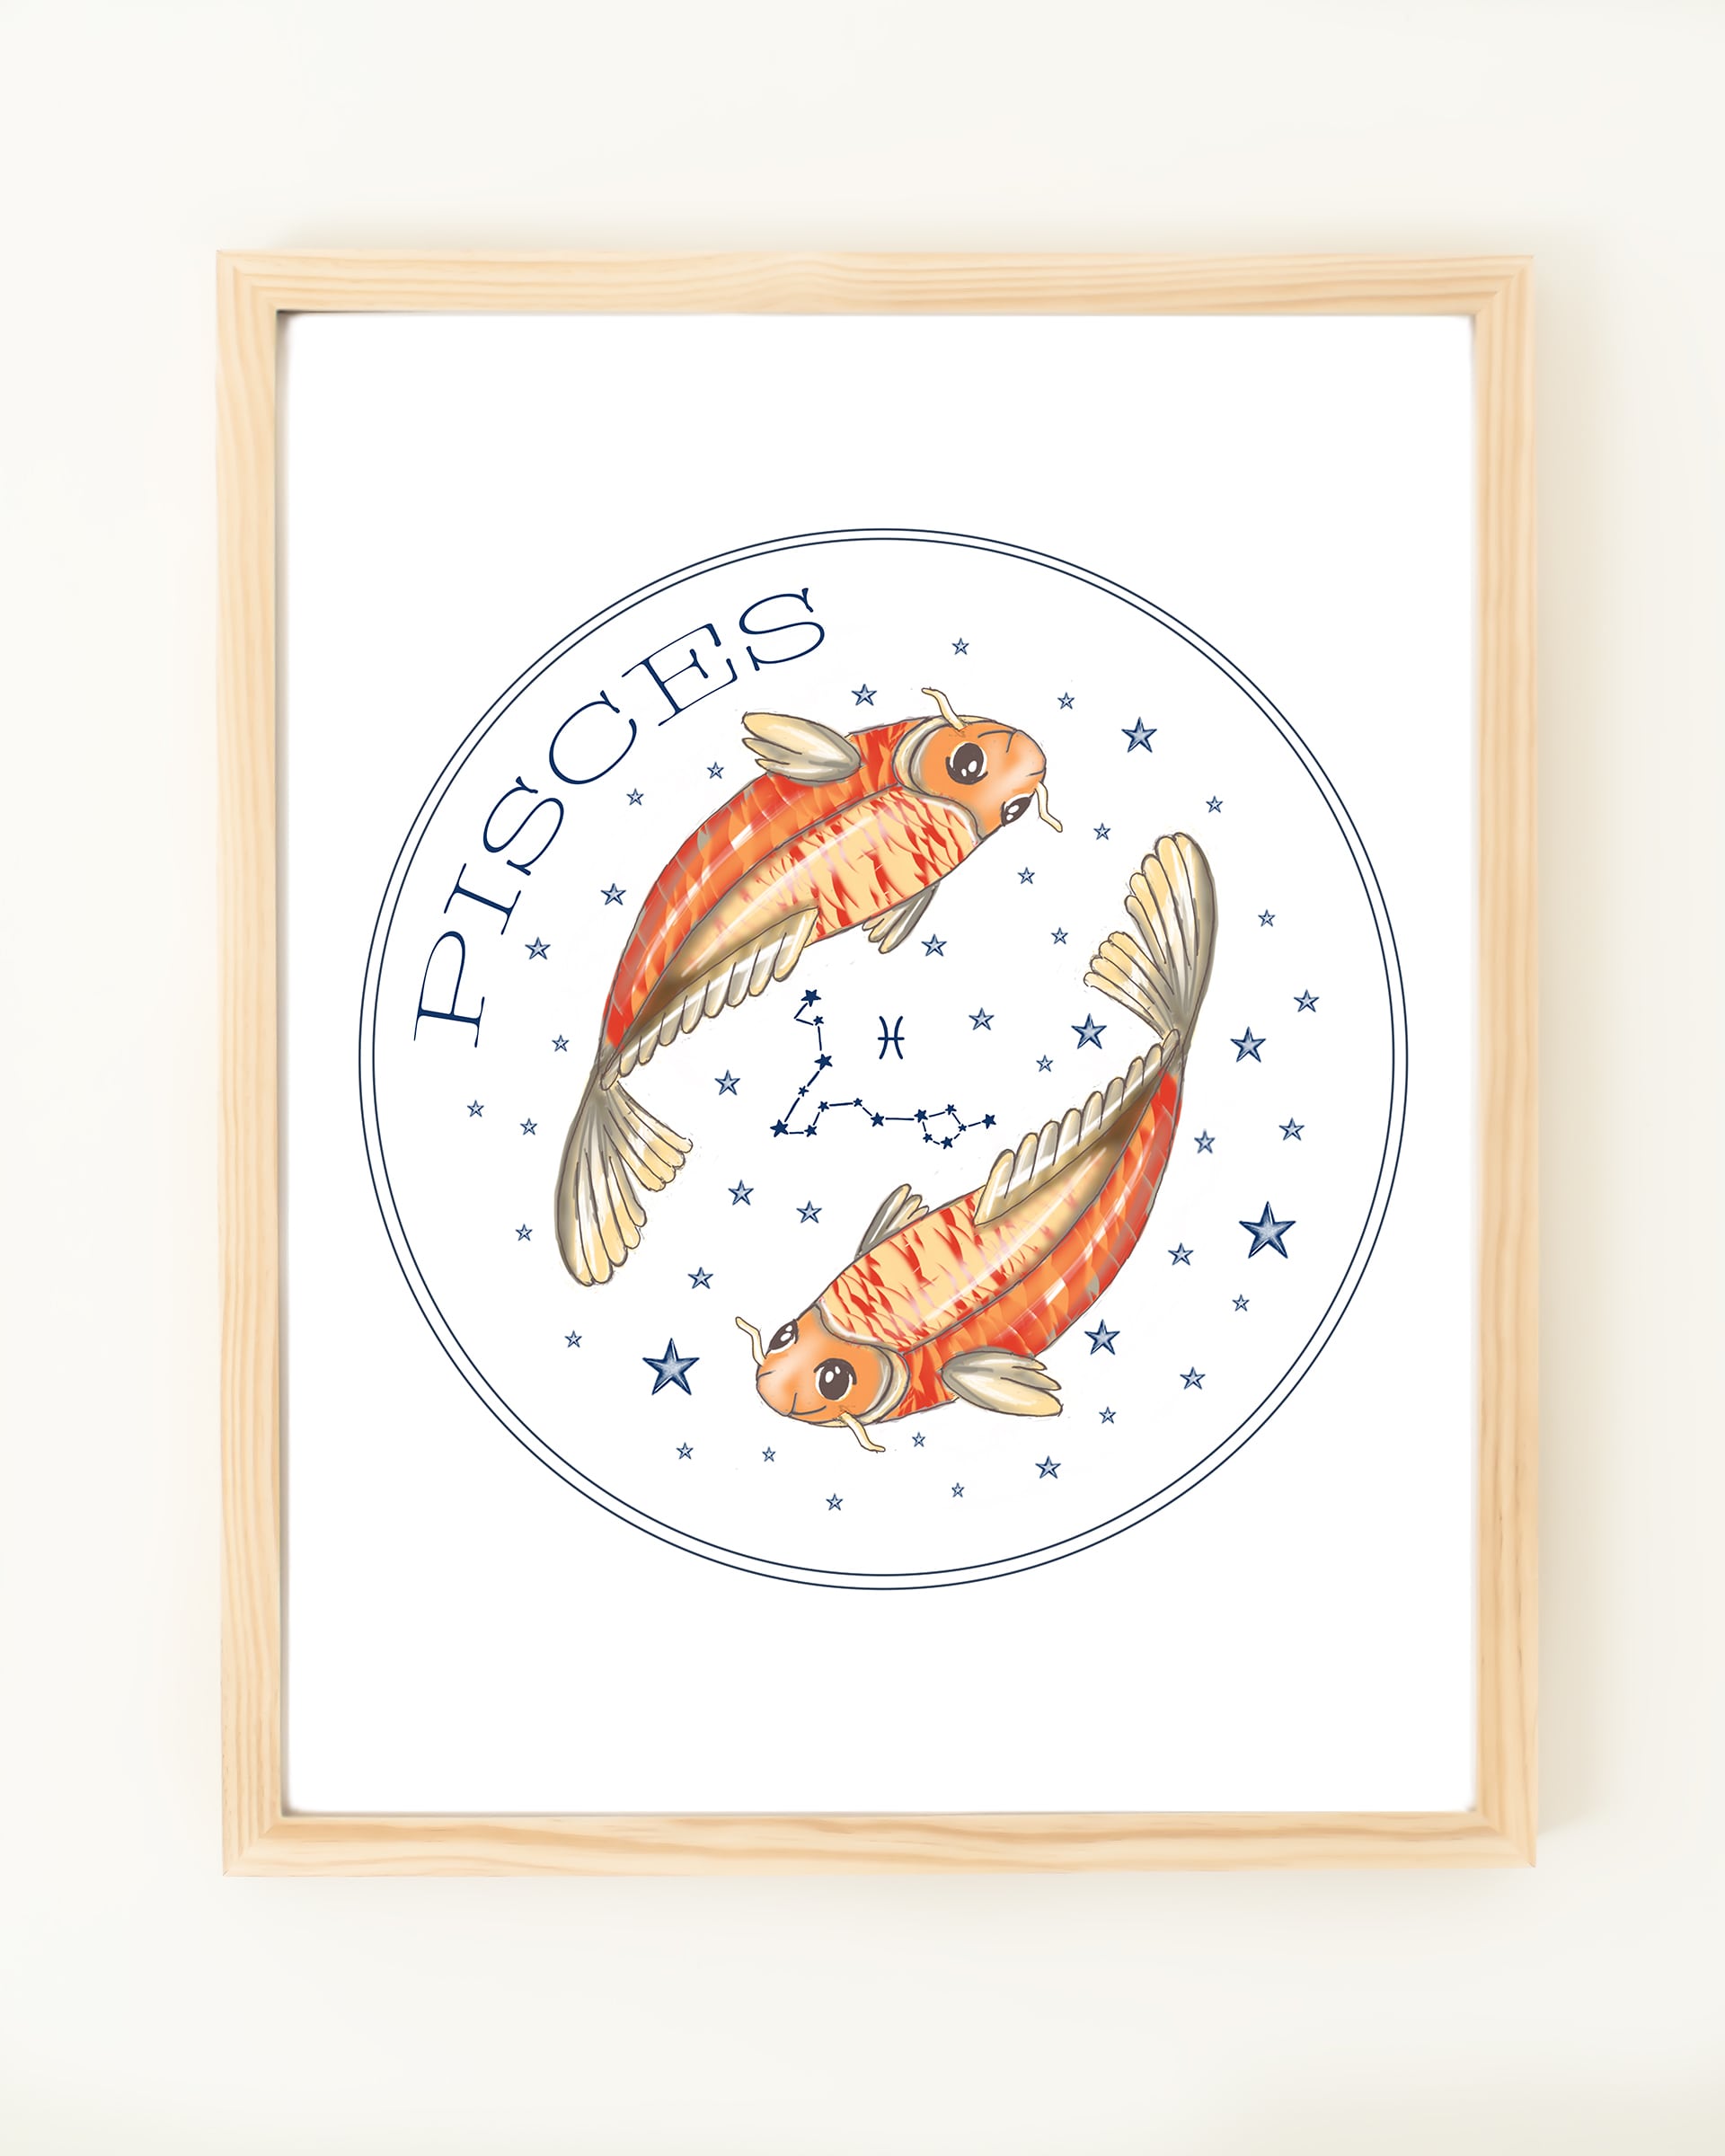 Framed hand drawn stars zodiac nursery decor wall art poster Pisces cute baby gold fish